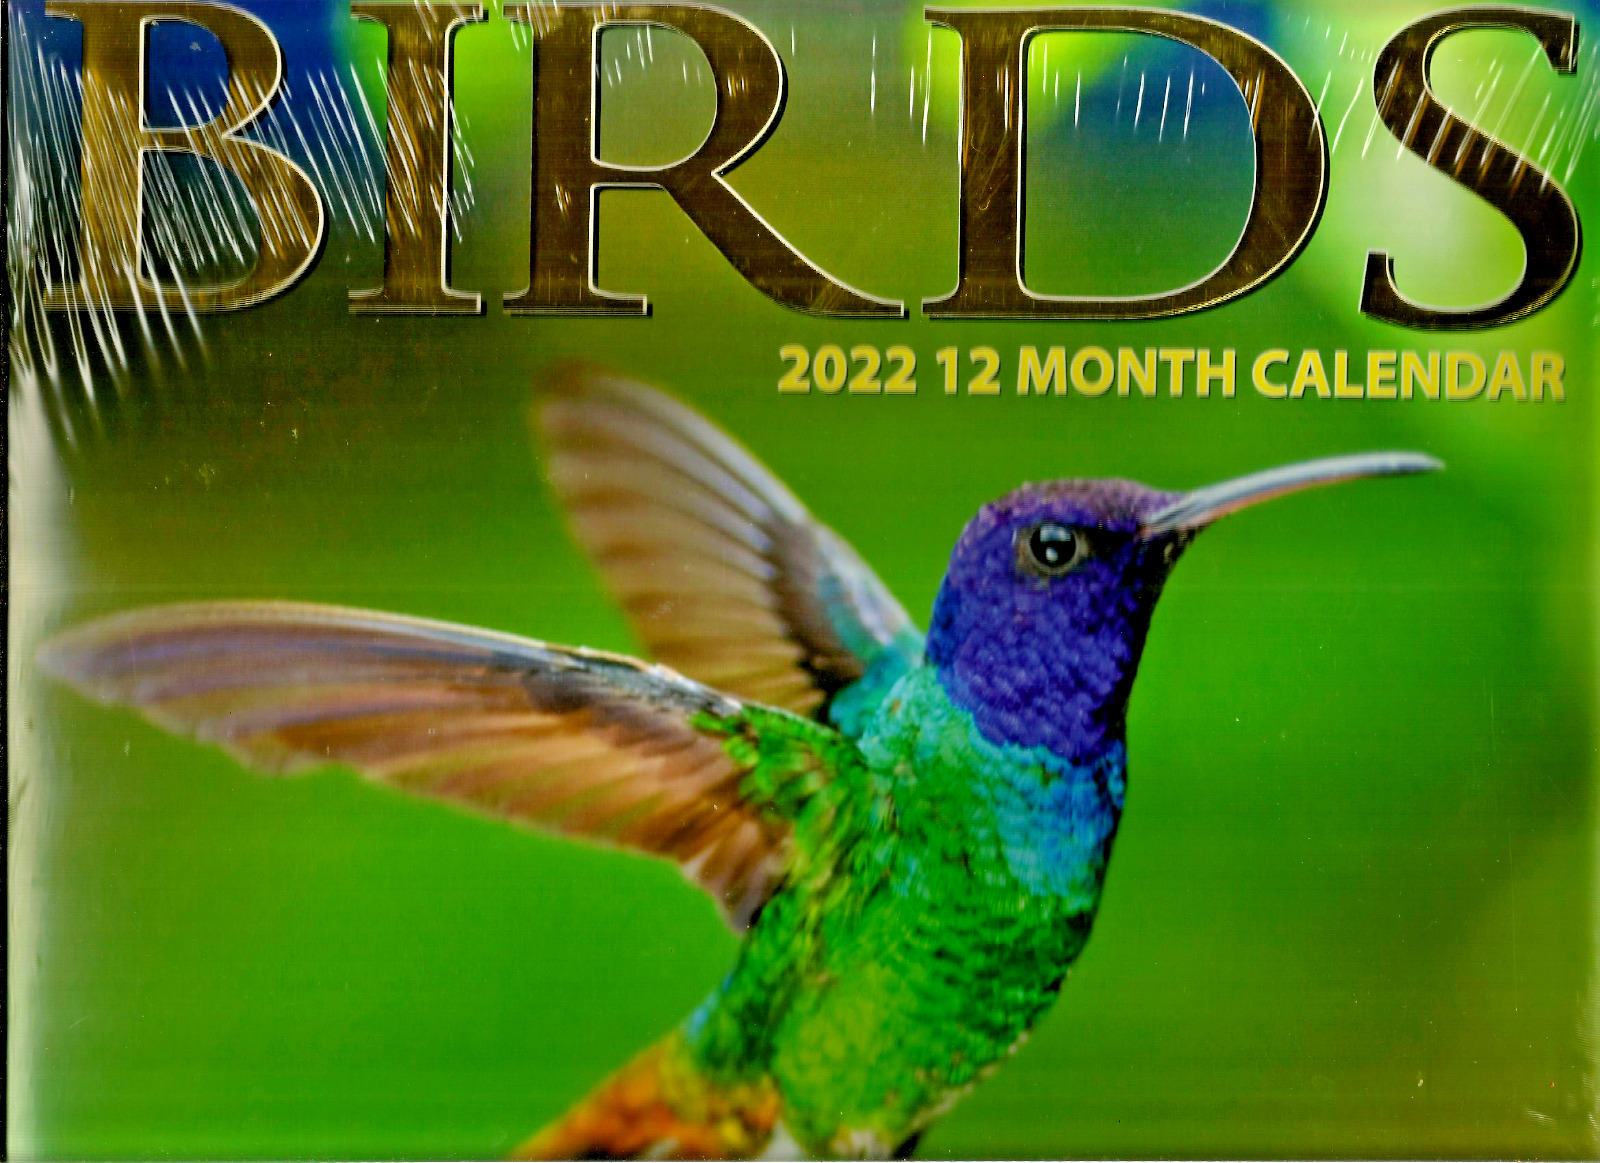 2022 BIRDS WALL CALENDAR LIFE ORGANIZER DAY PLANNER BIRD PIC CRAFT IDEA FREE S/H